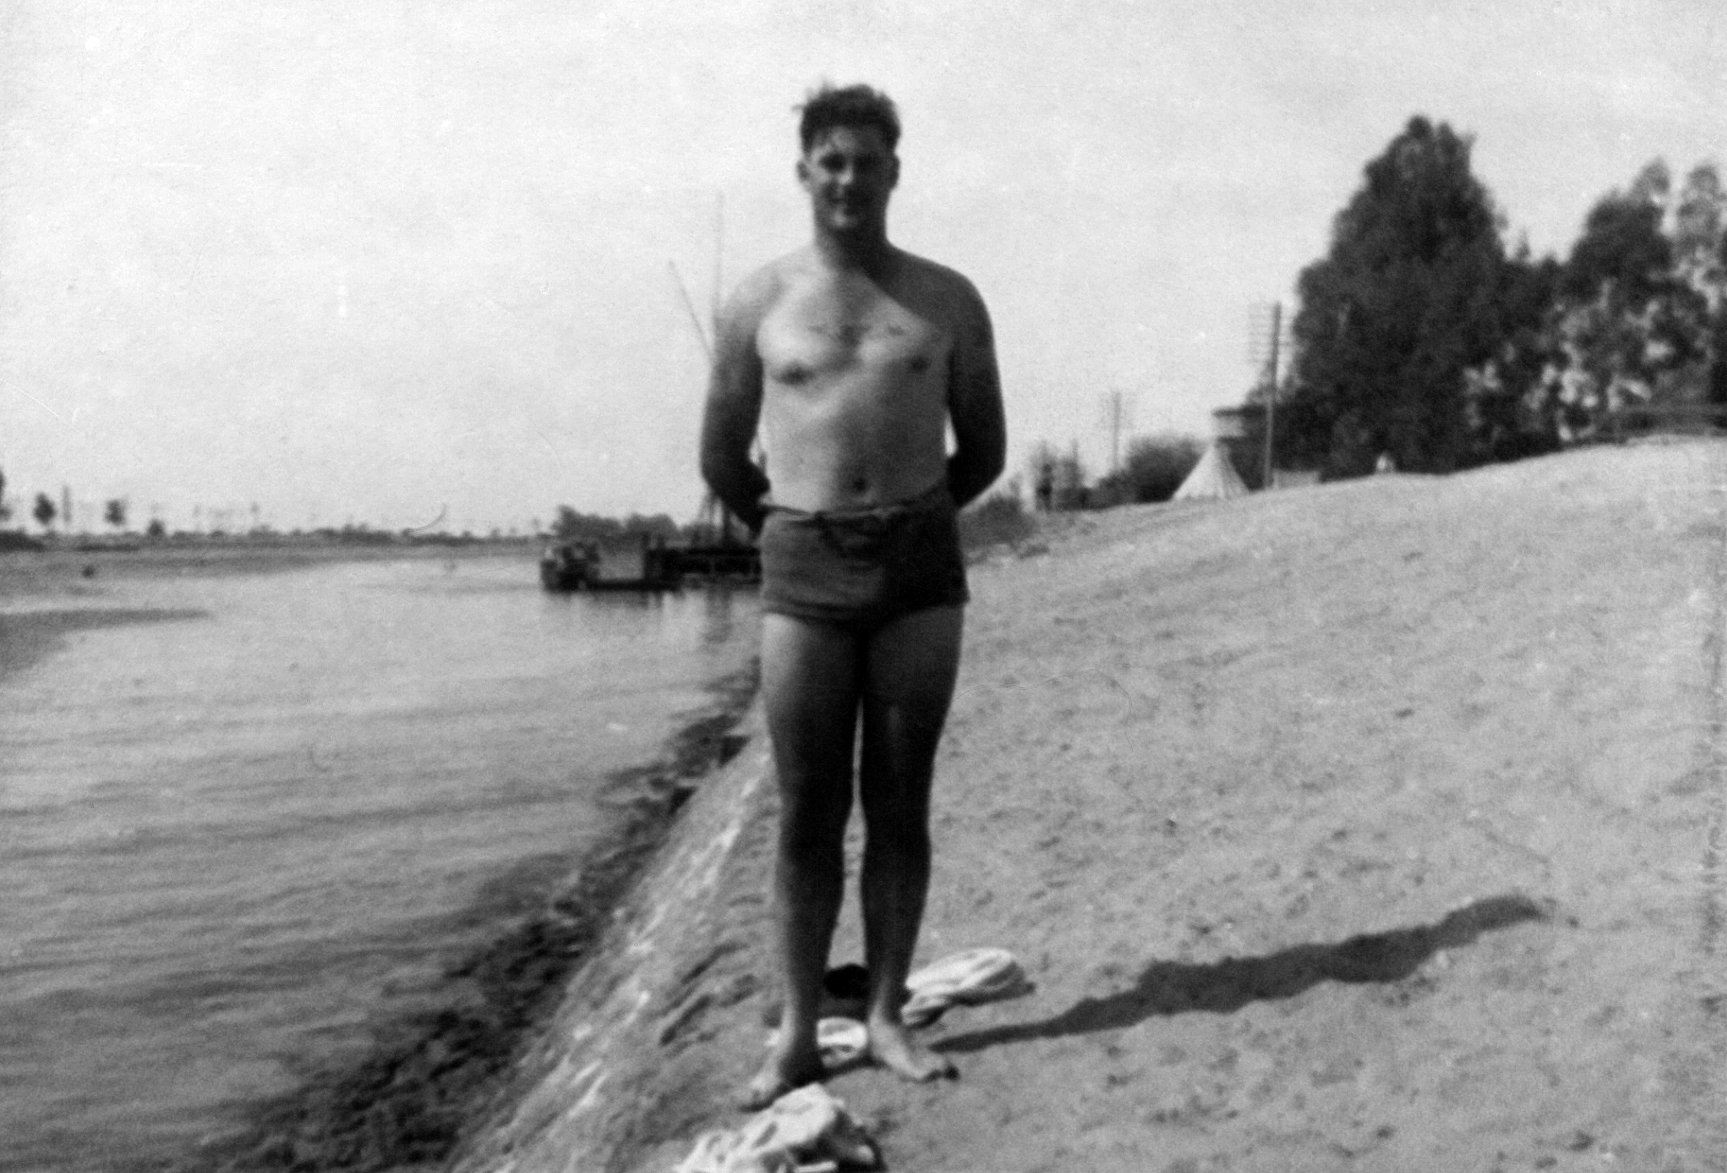 a man in underwear is standing on the beach near water